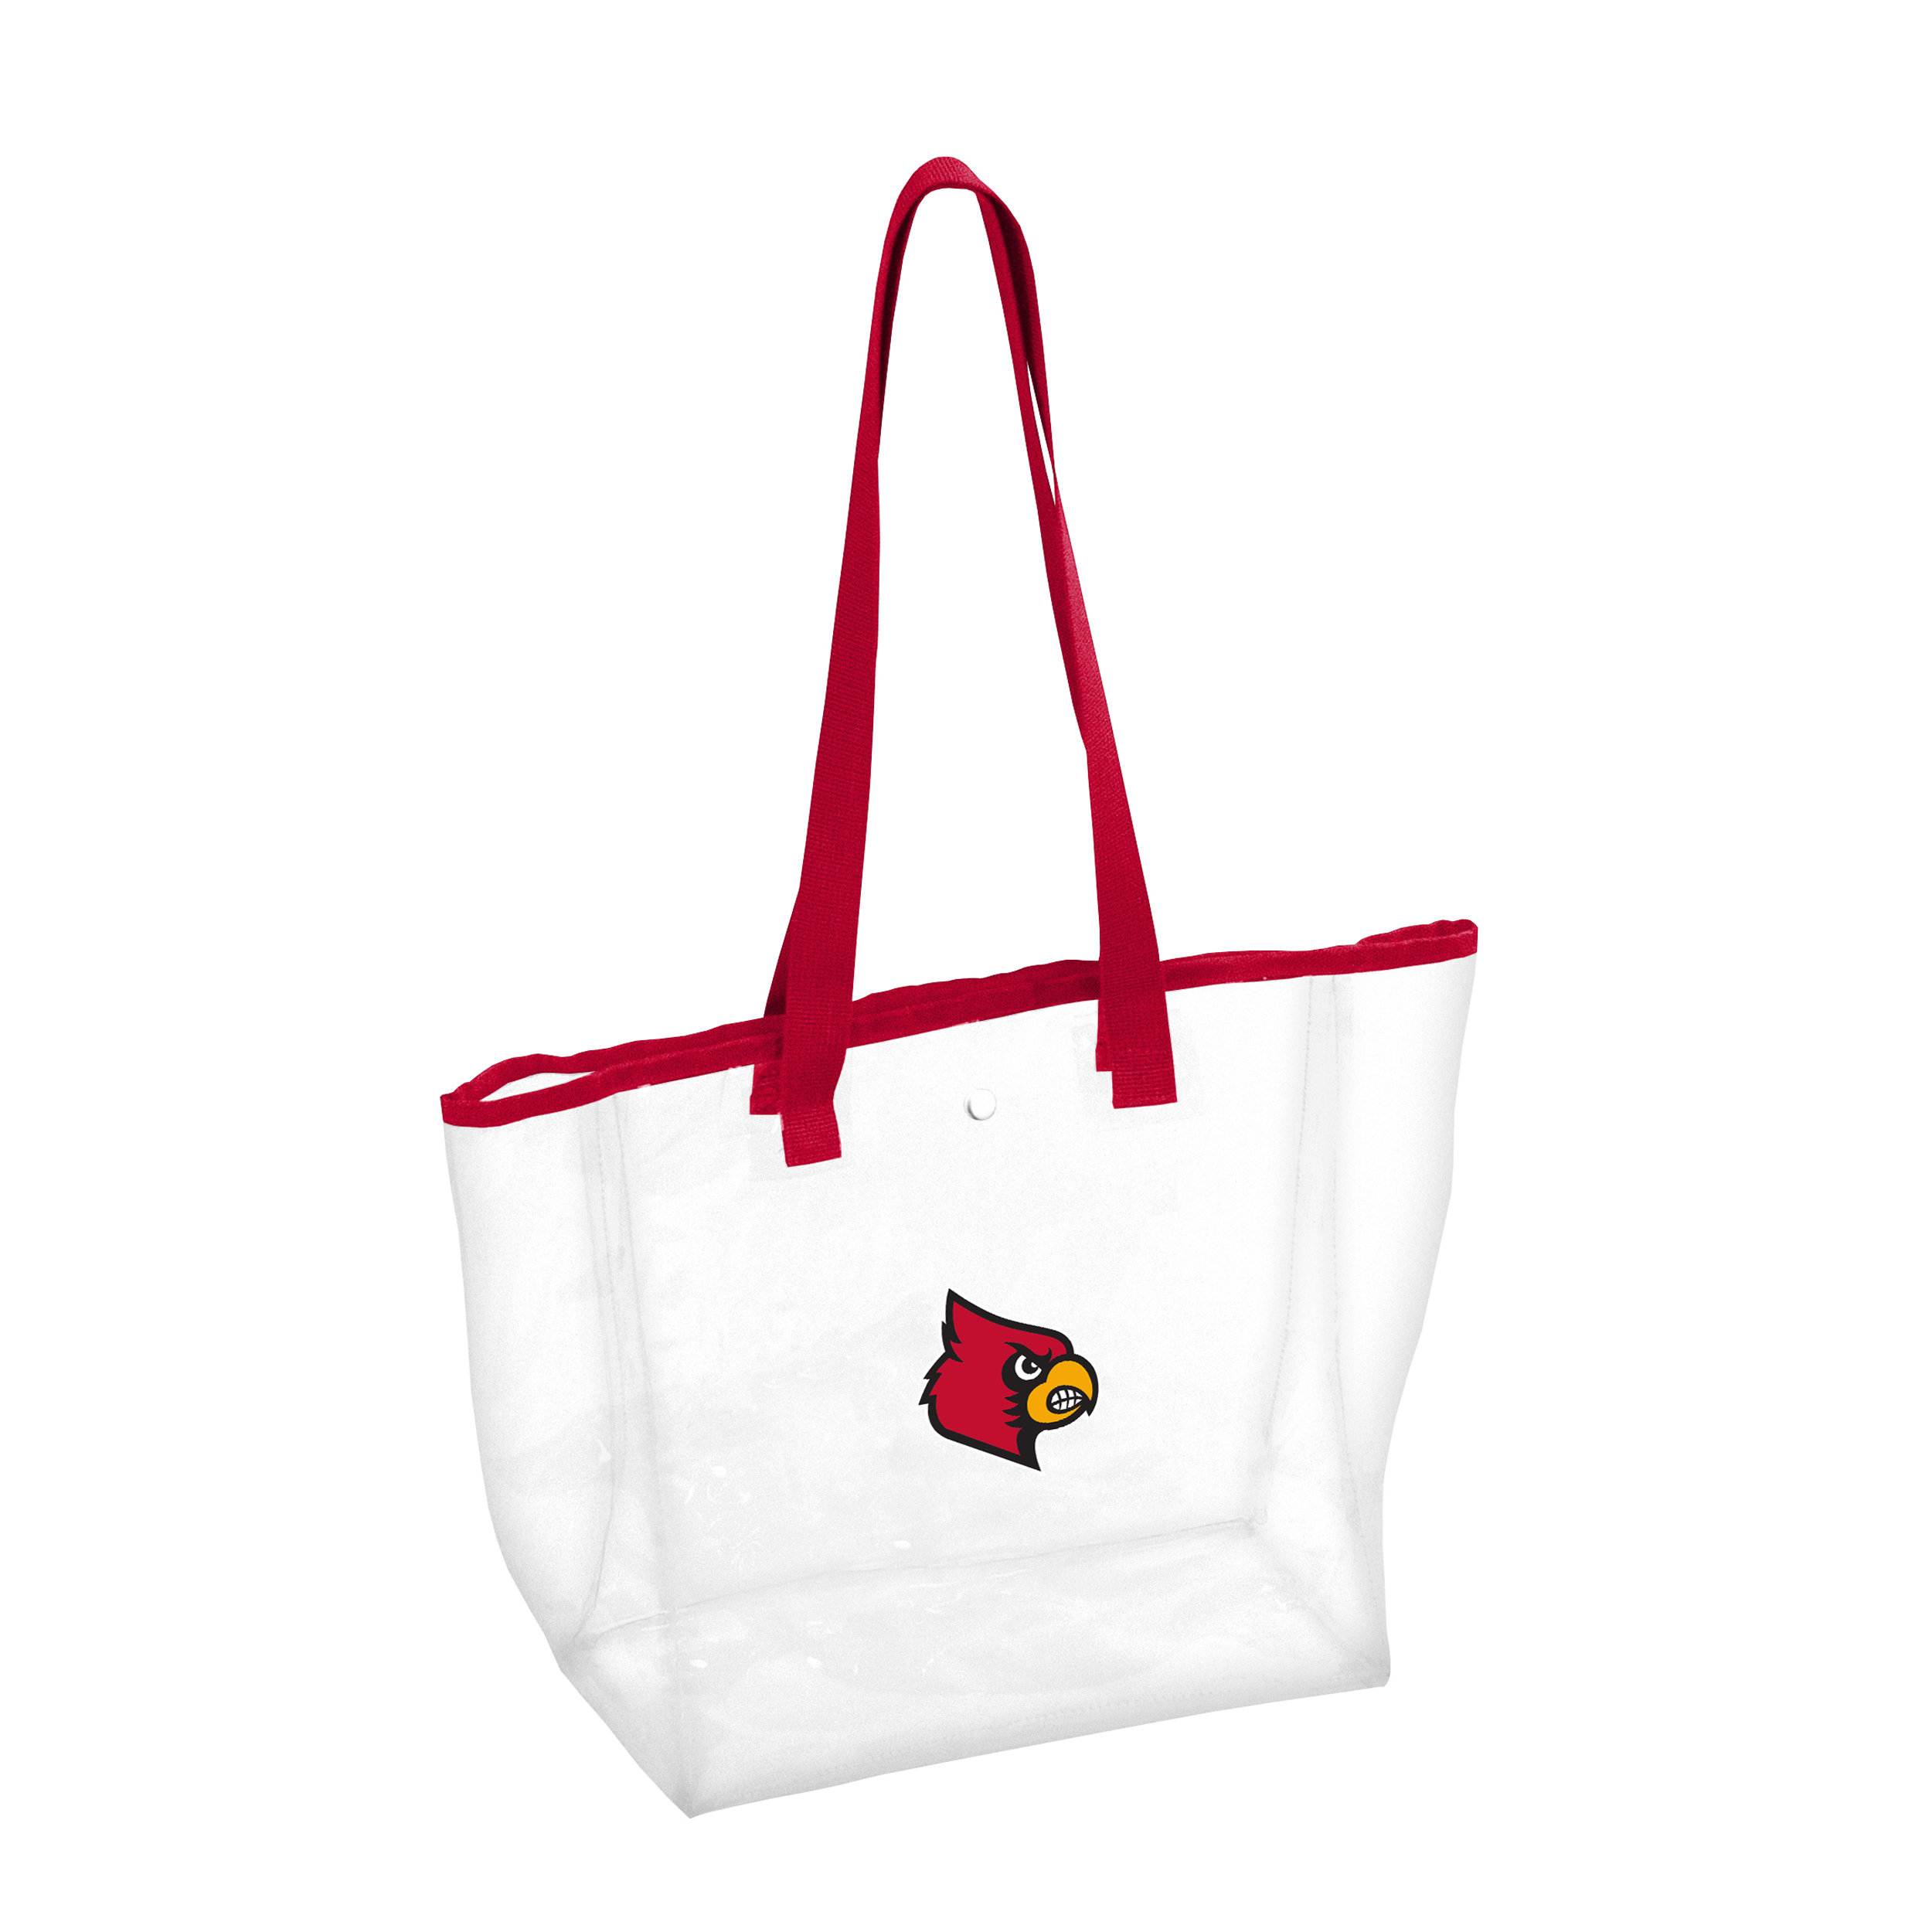 Louisville Cardinals Clear Stadium Bag